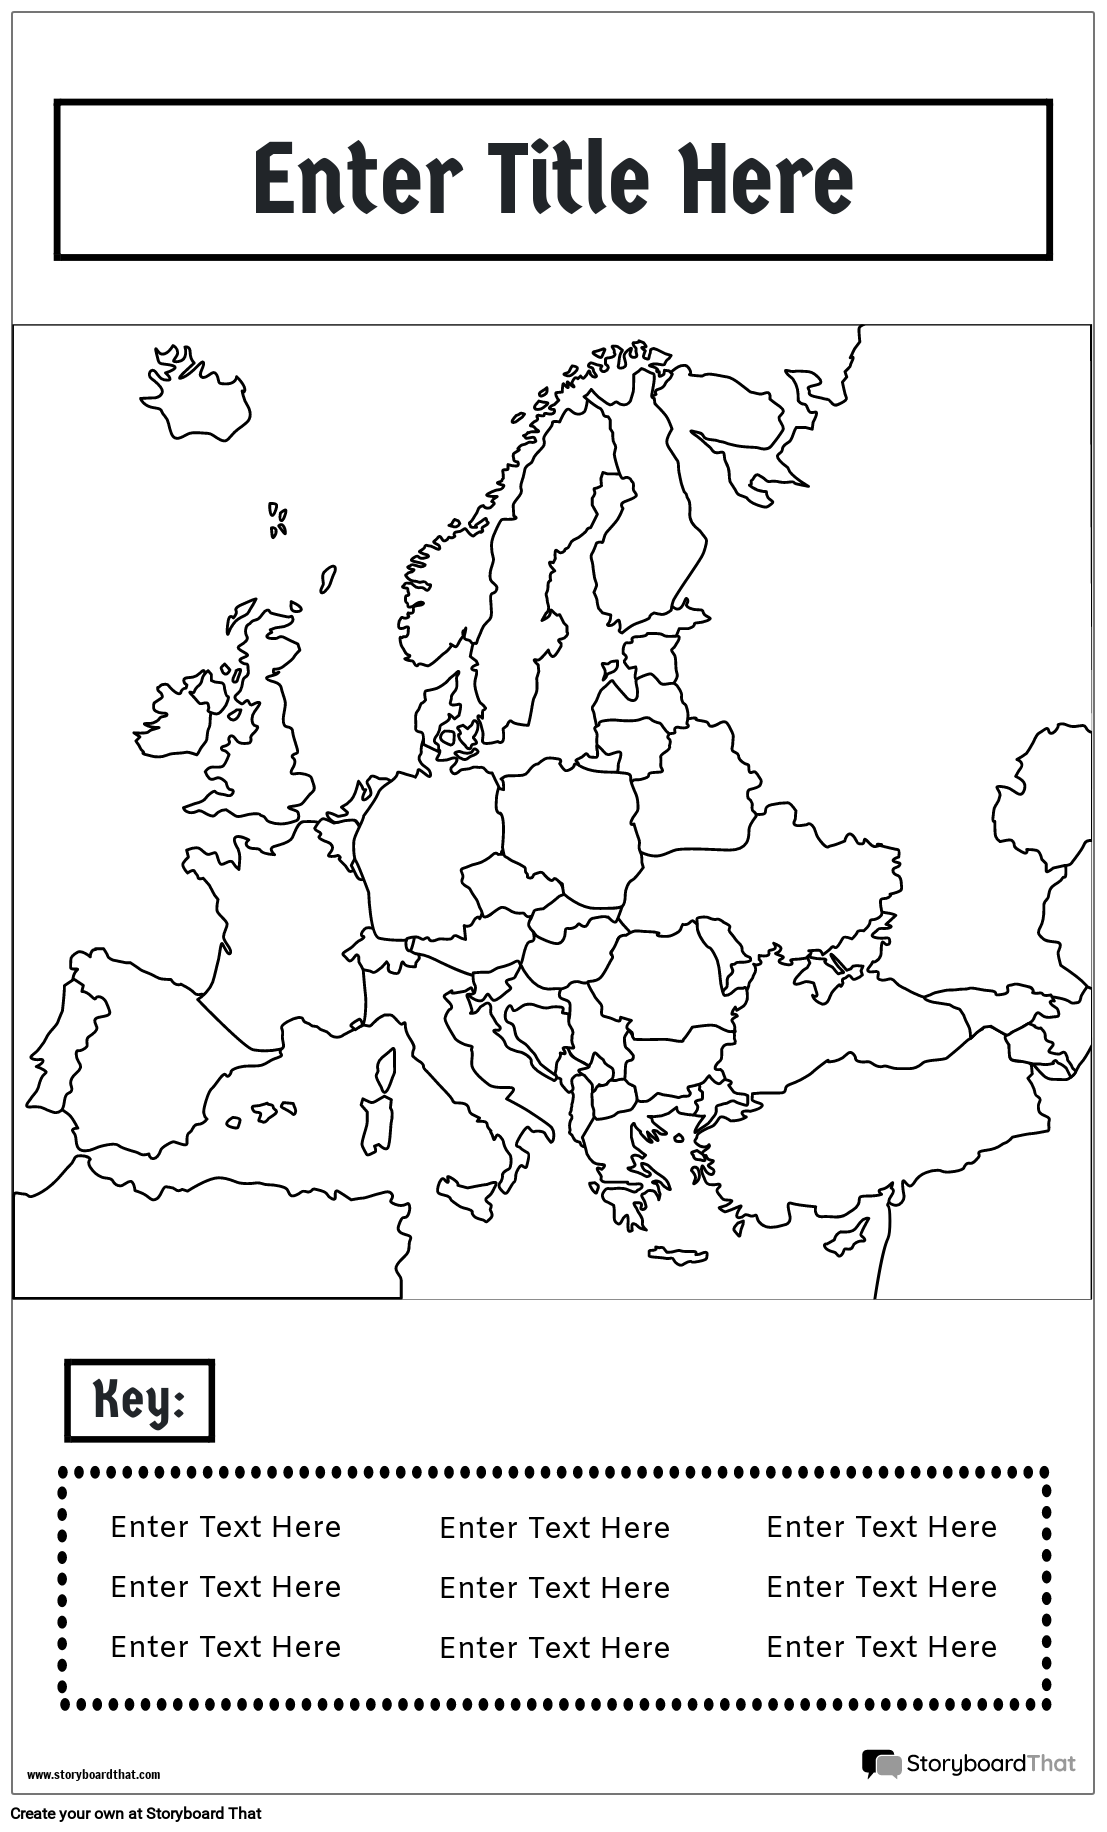 Карта Плакат 17 BW Портрет-Европа